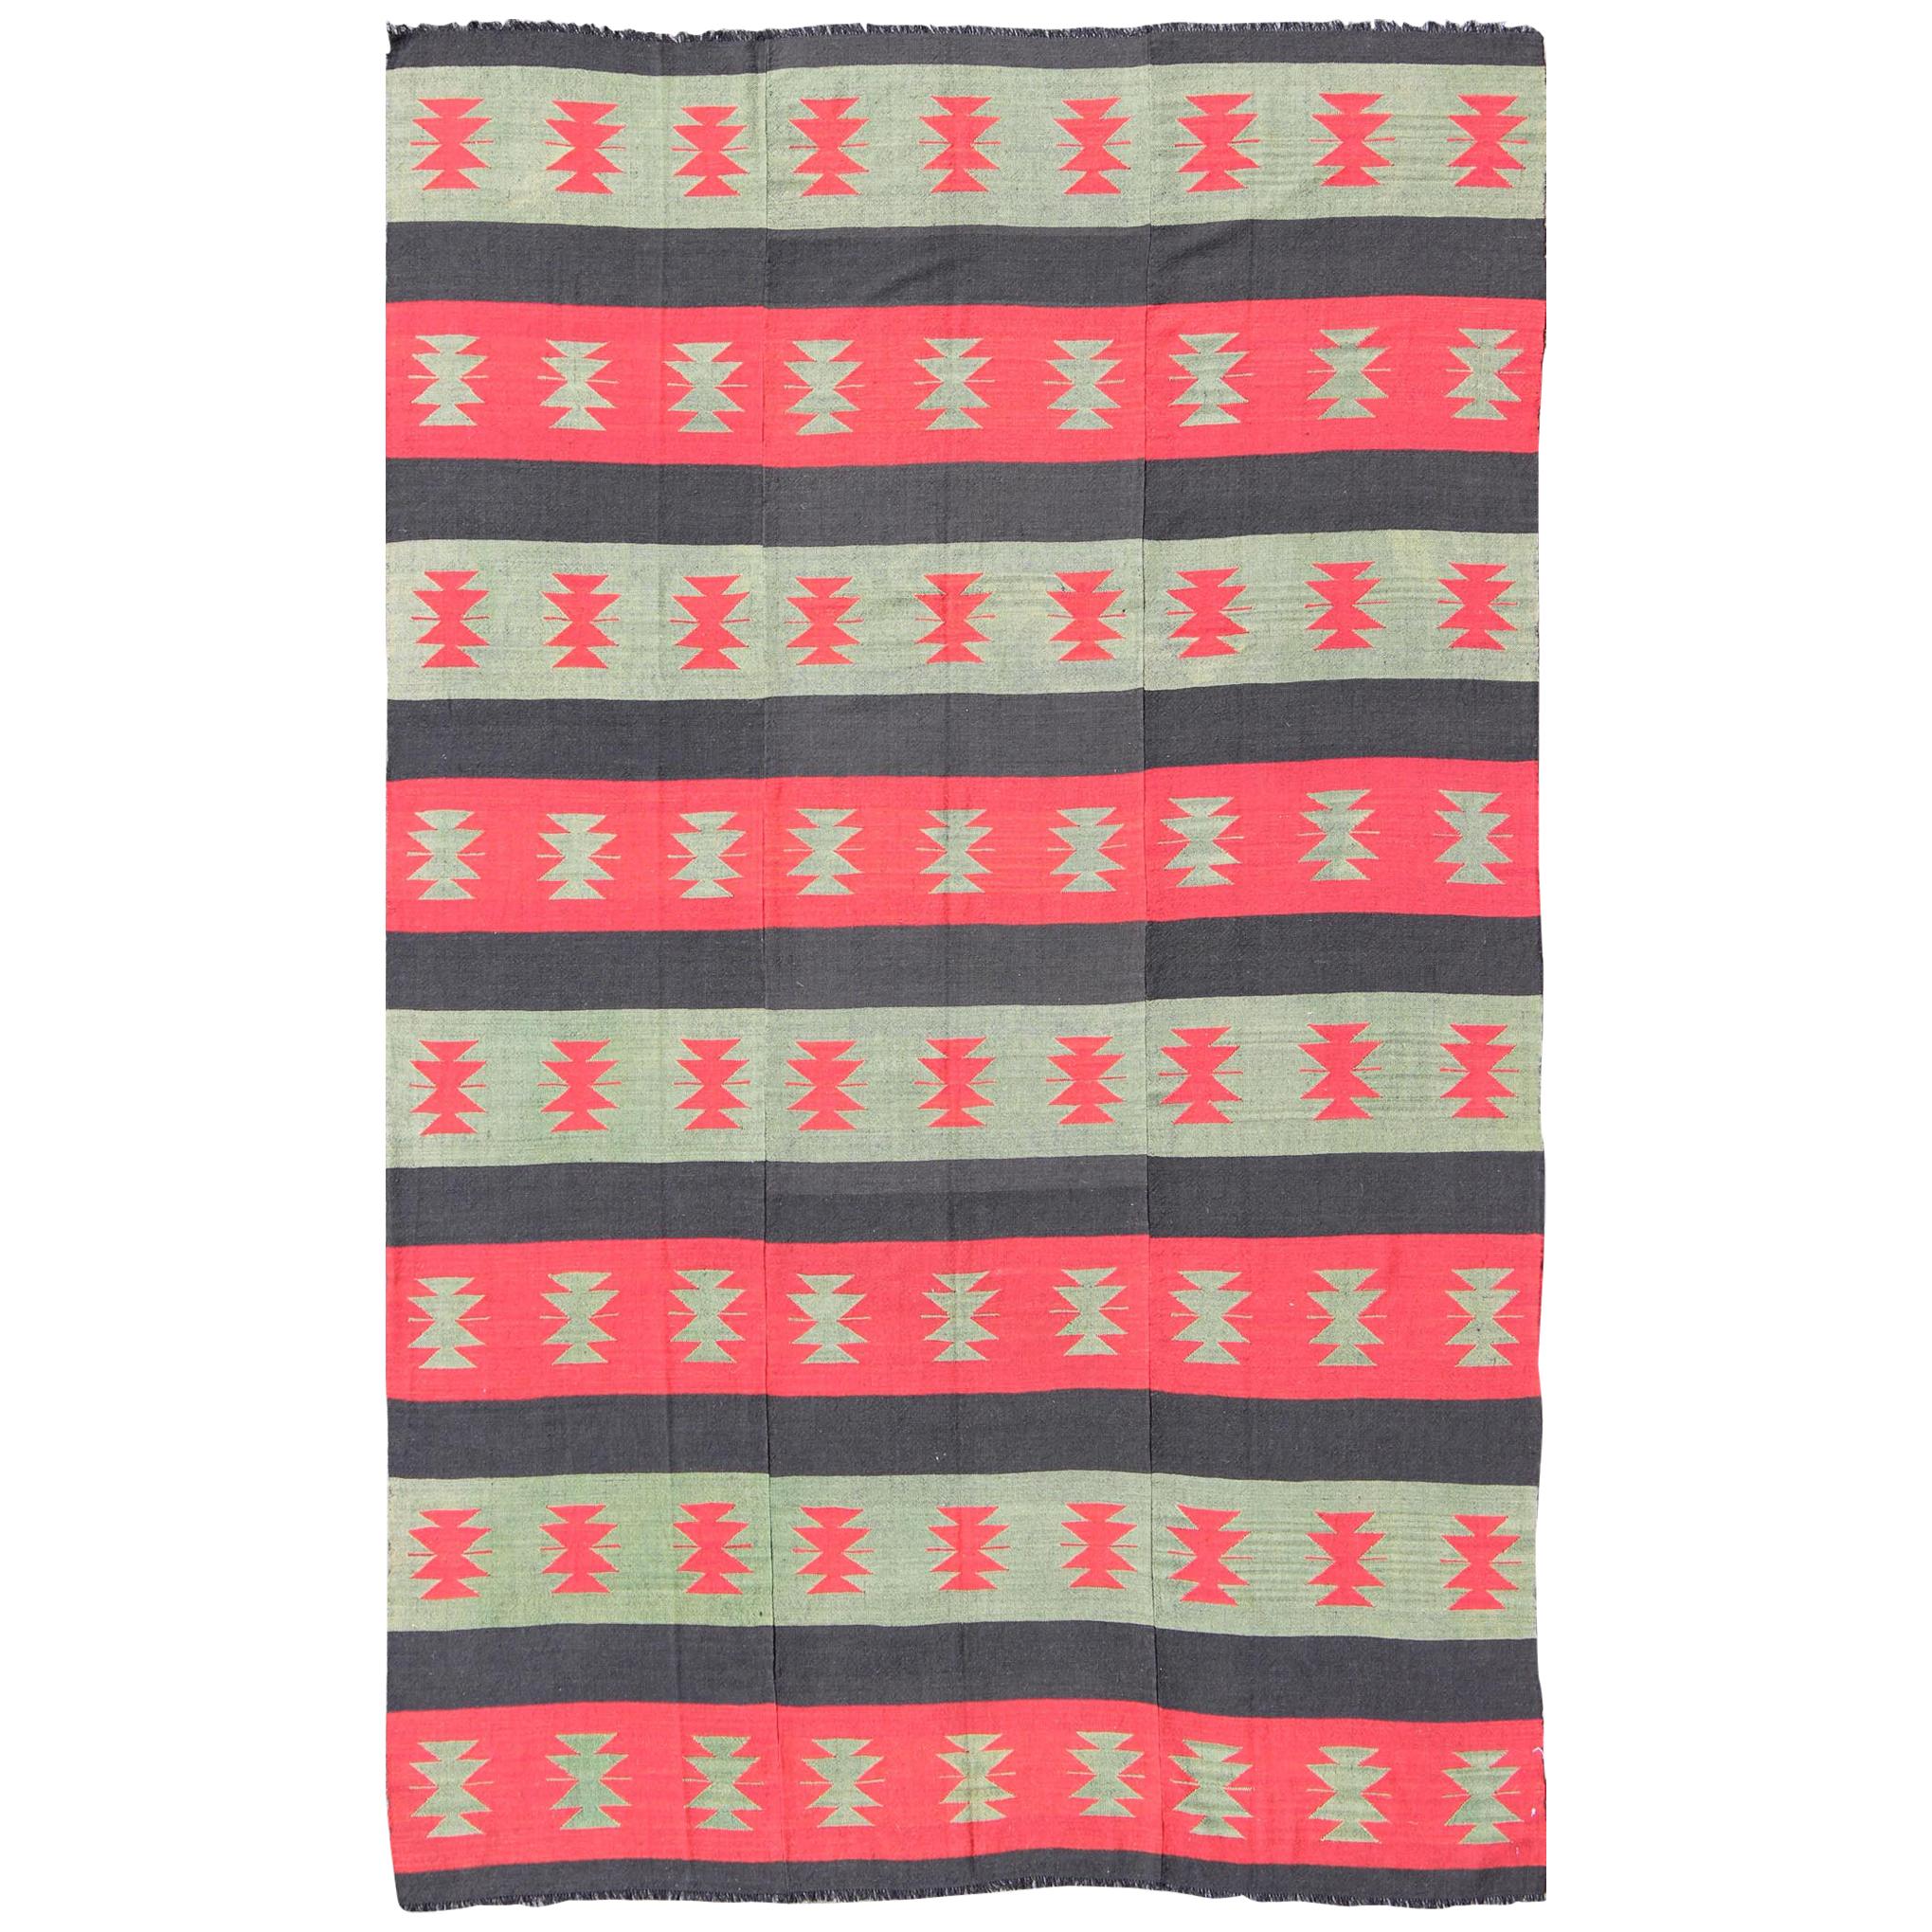 Grand tapis Kilim vintage avec formes tribales et rayures rouges, brunes et vertes en vente